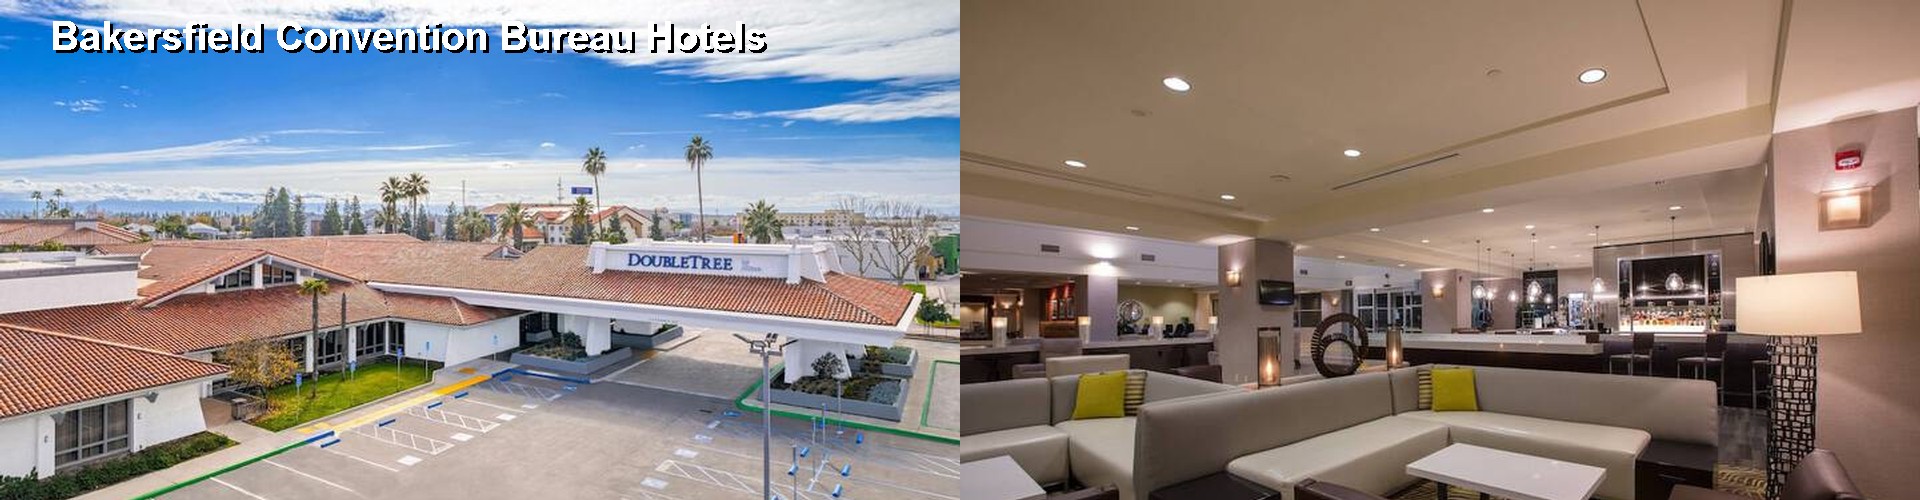 5 Best Hotels near Bakersfield Convention Bureau